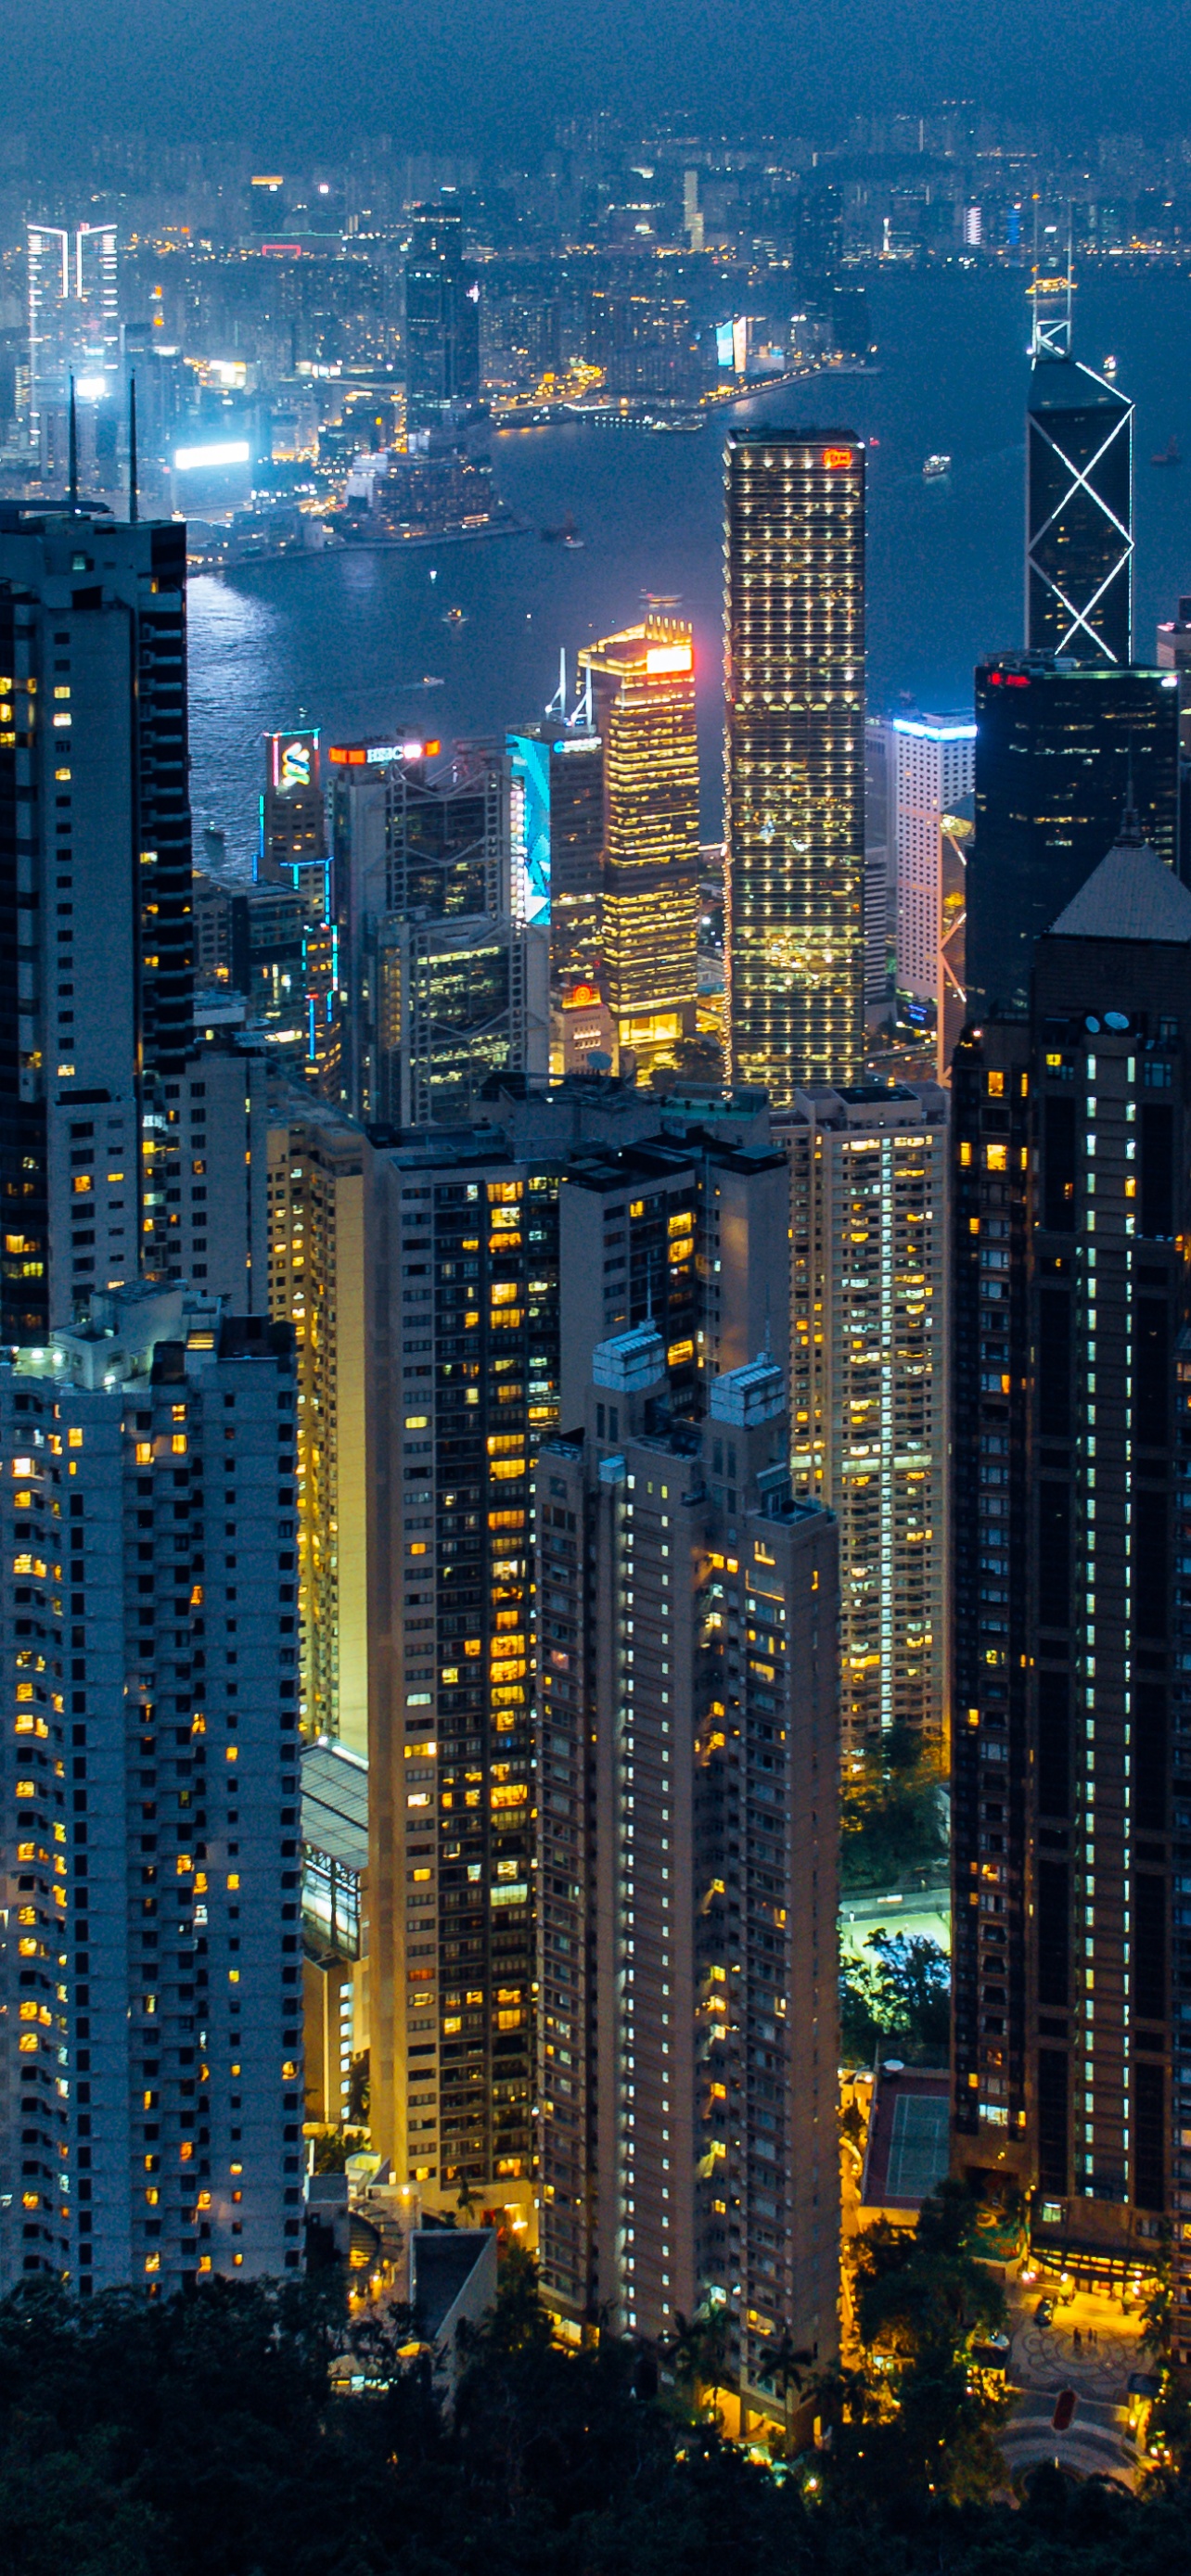 Hong Kong City Wallpaper 4K, Skyline, Cityscape, City lights, Night